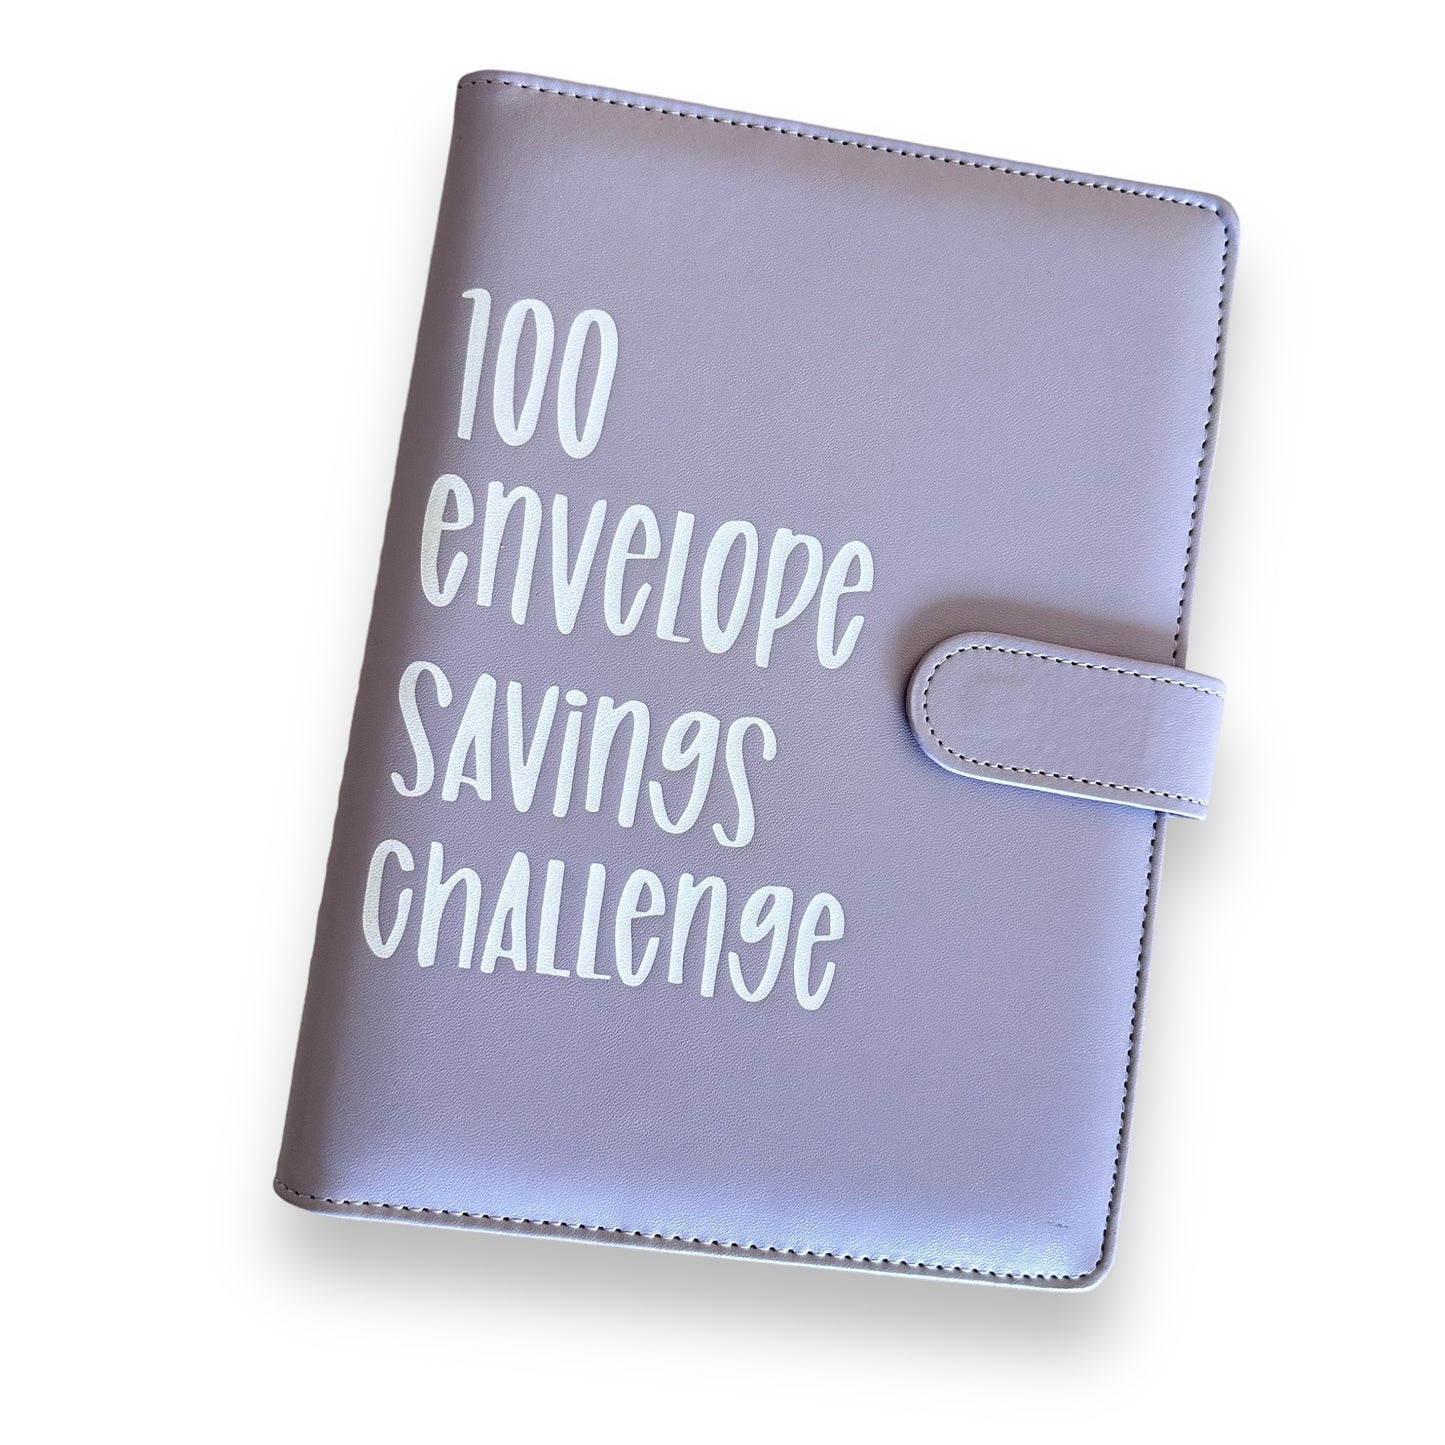 100 envelope savings challenge